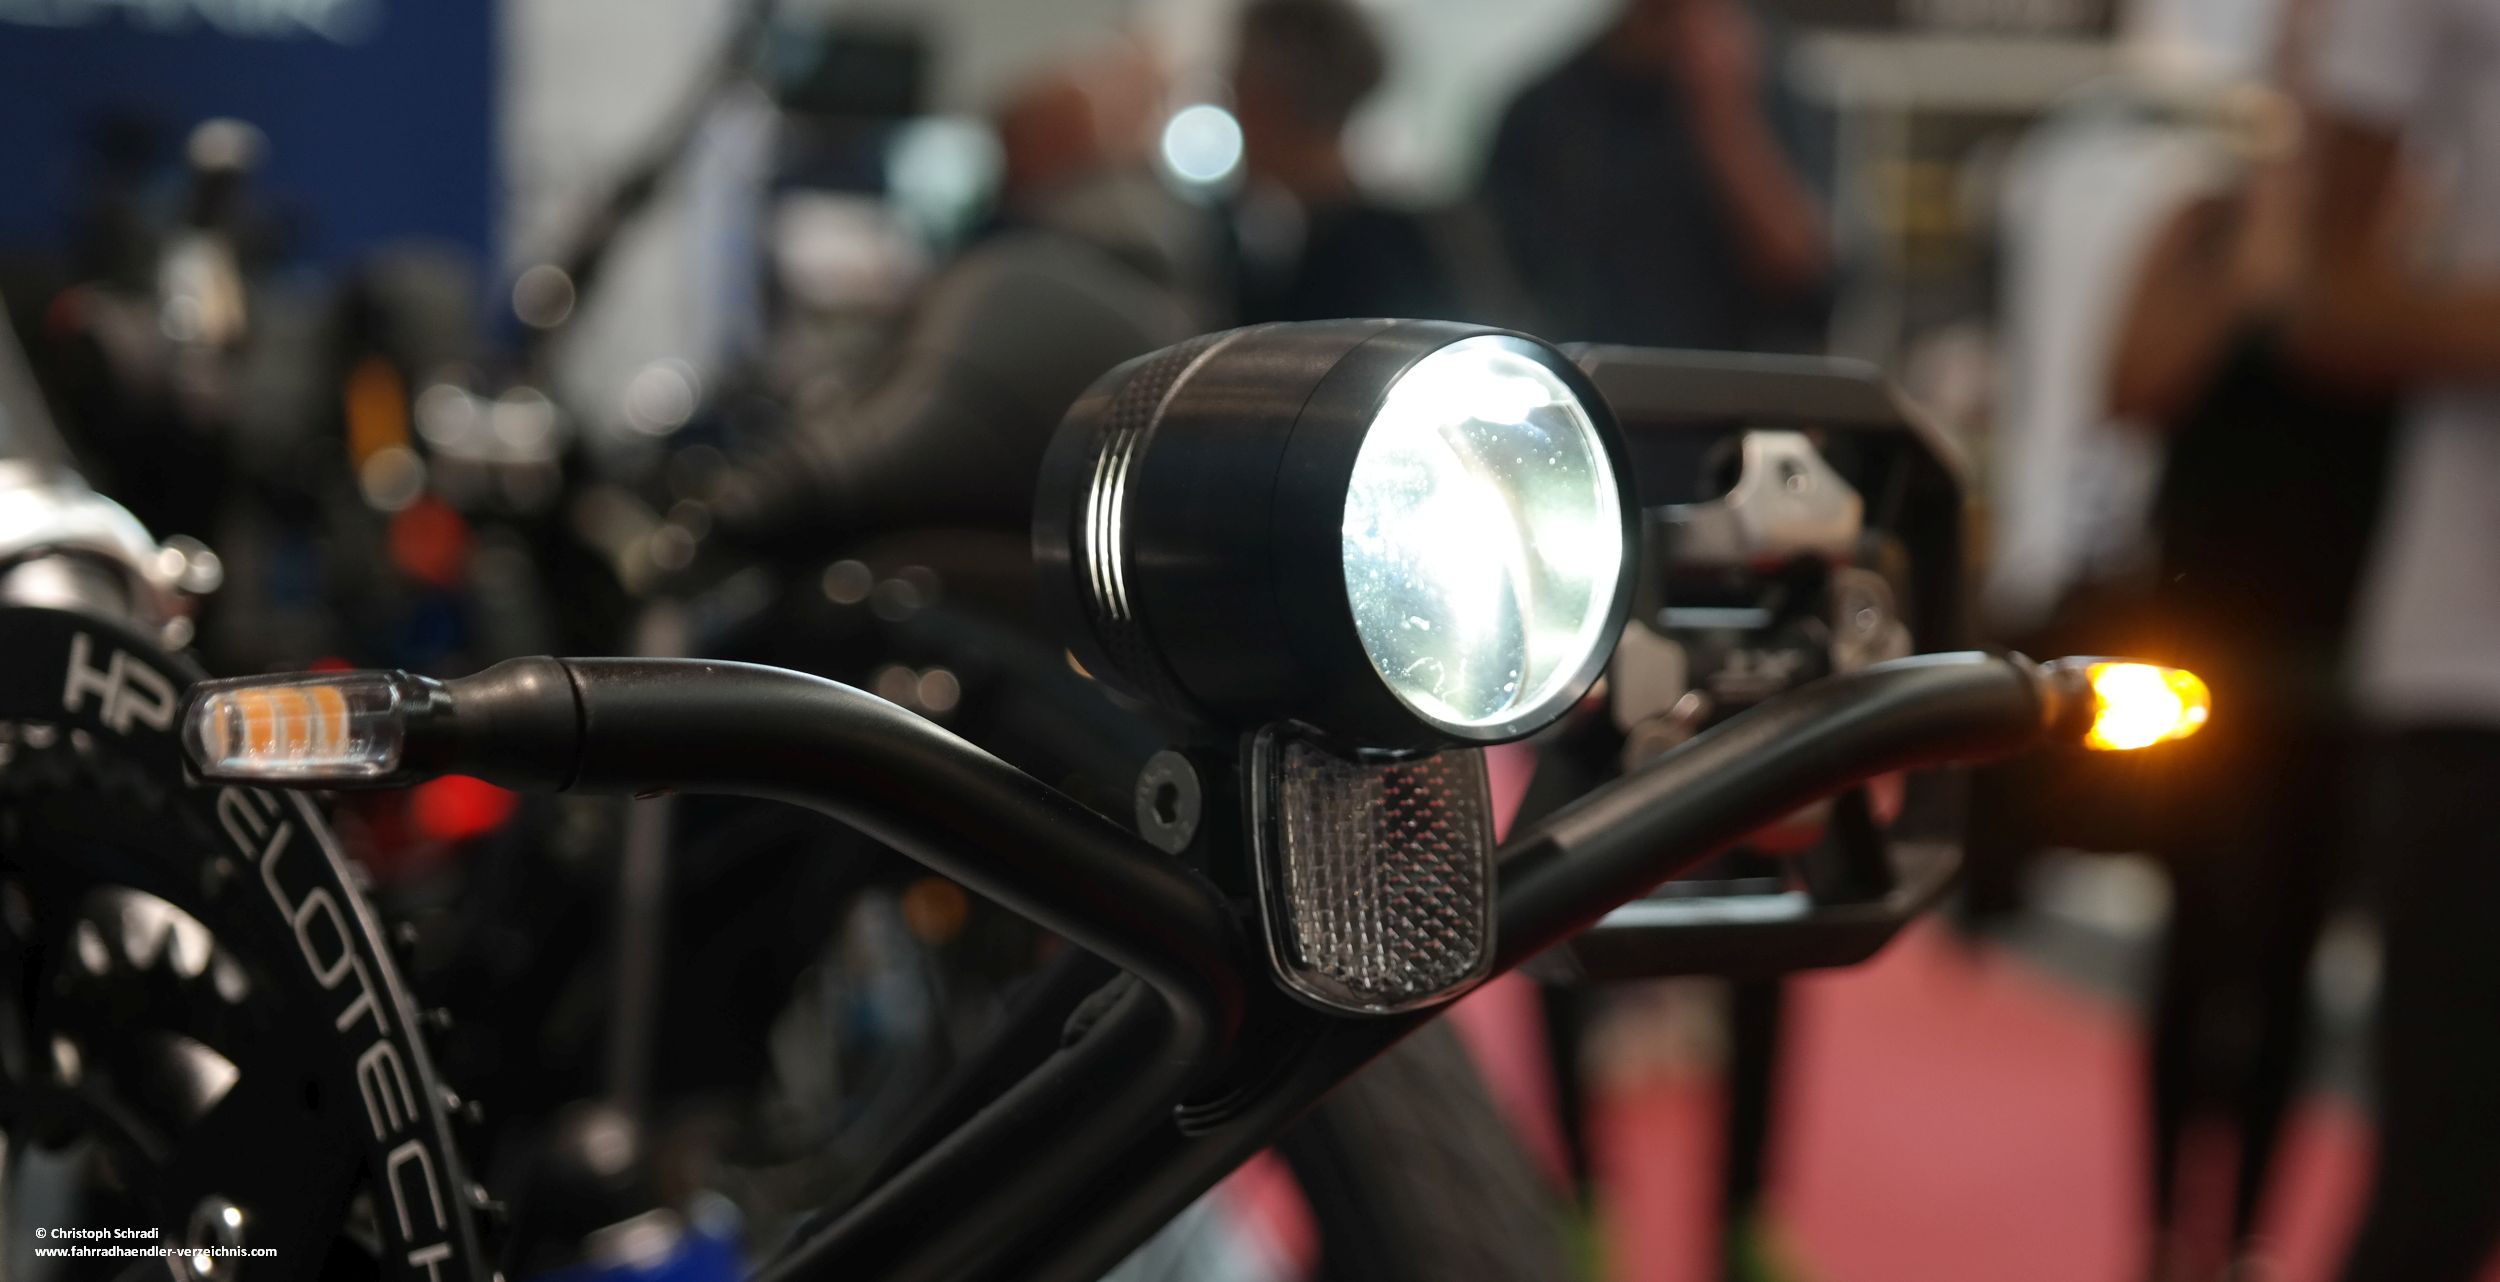 Blinker auch am E-Bike - der brandneue E-Bike Blinker von Hp-Velotechnik ermöglicht Automobile Technik am (E-)Fahrrad